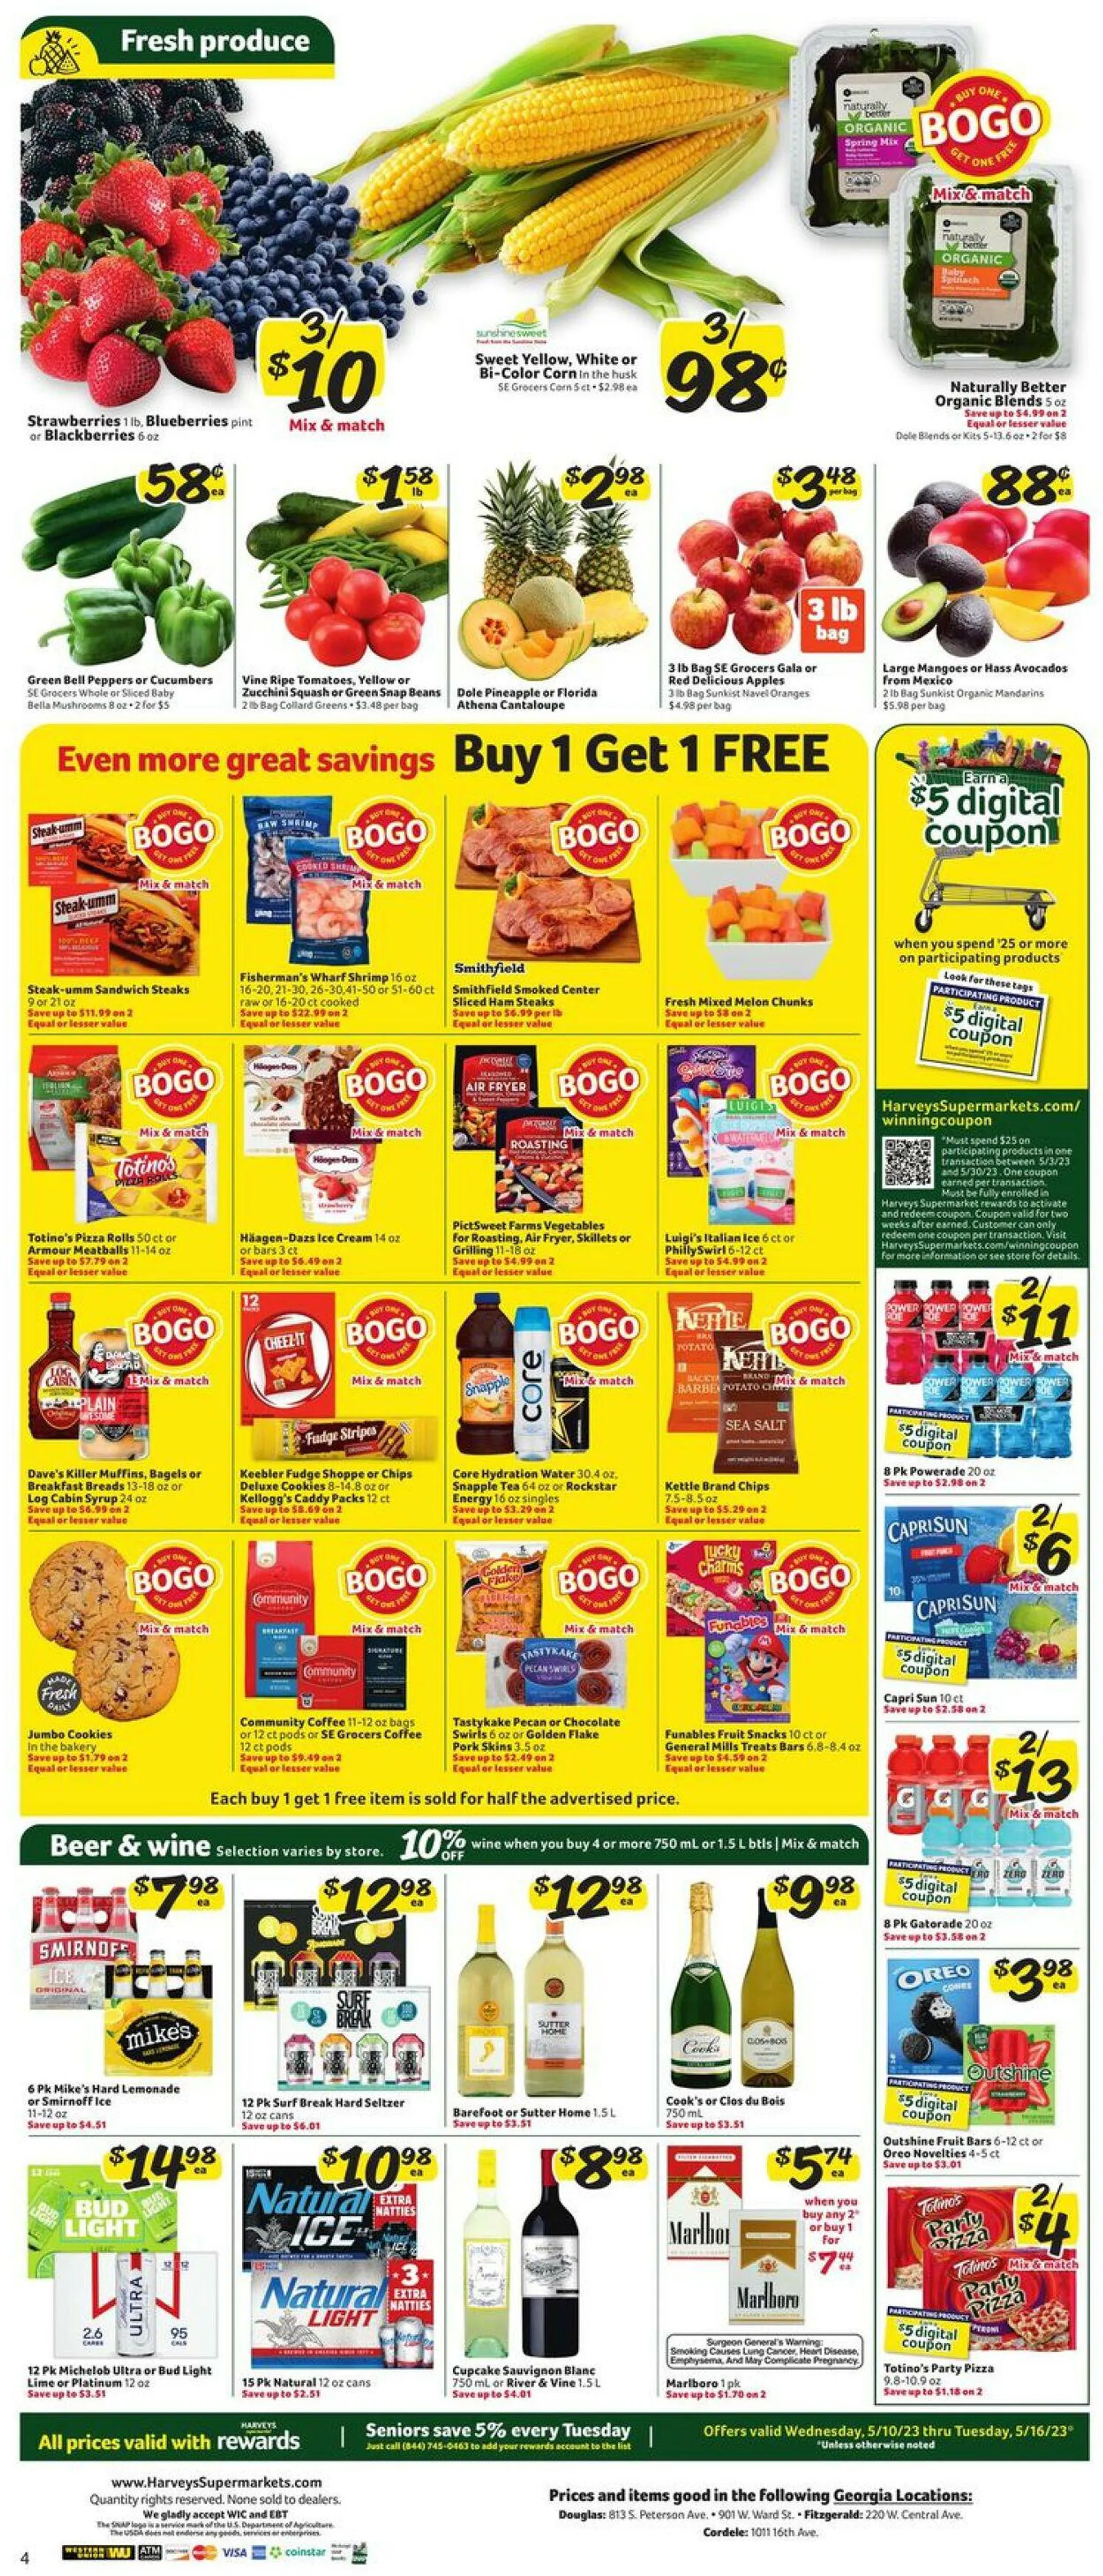 Harveys Supermarket Current weekly ad - 10